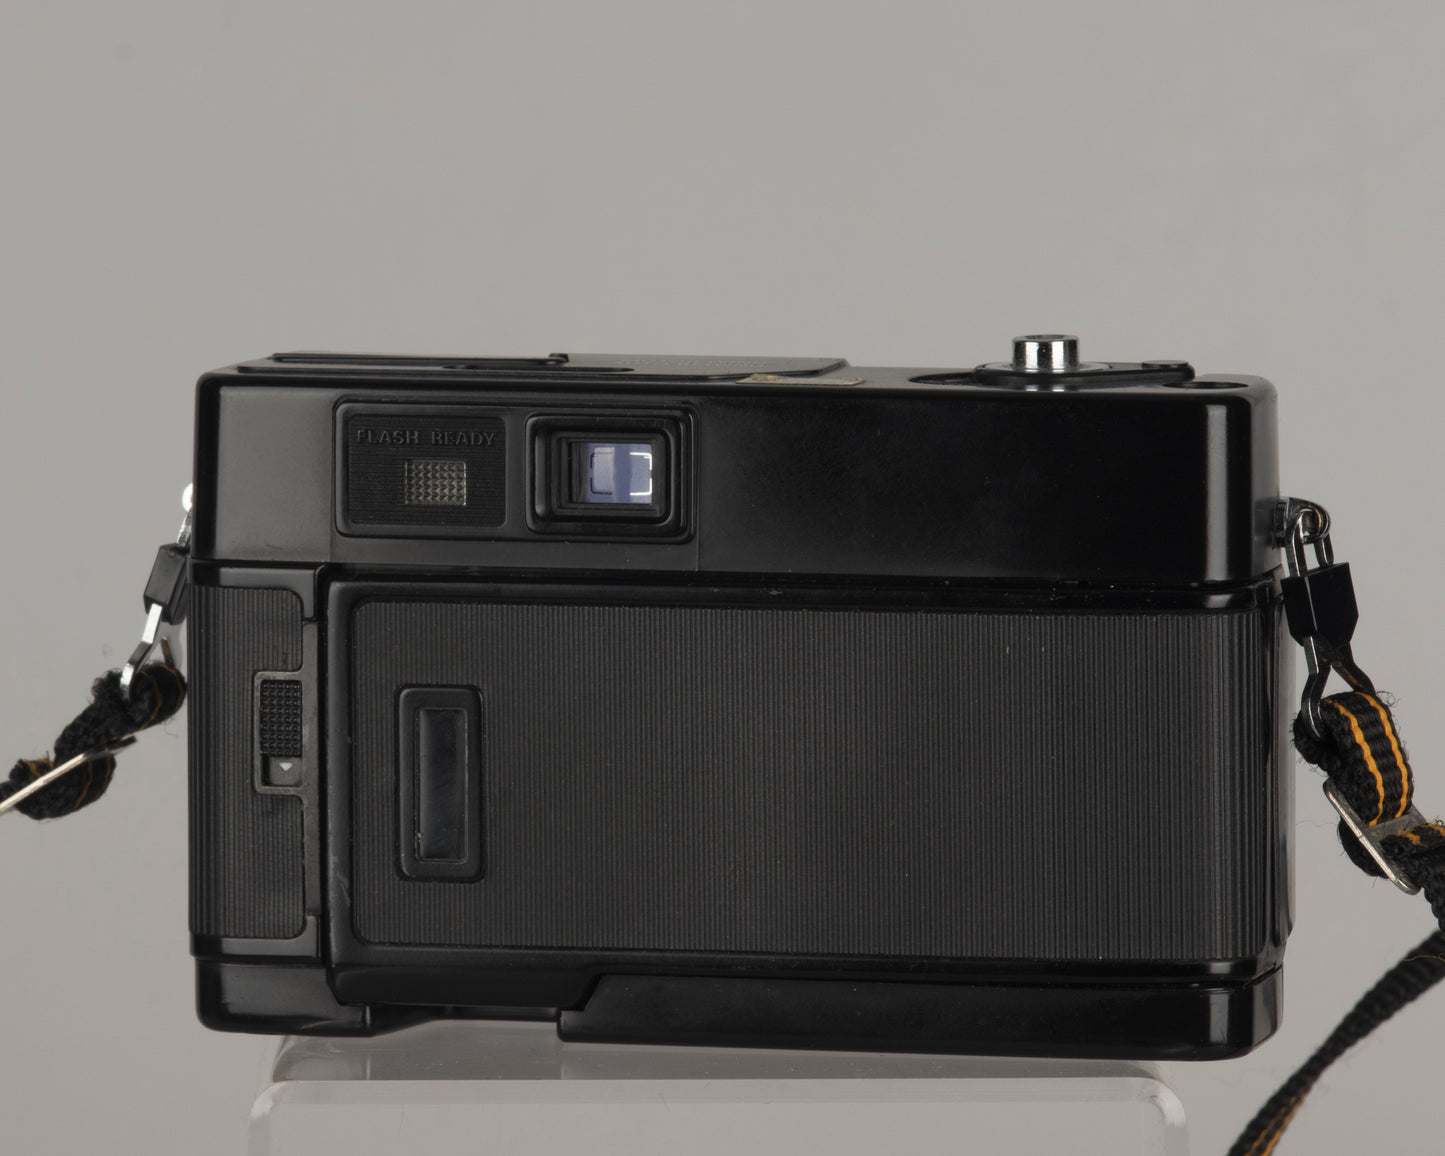 Kodak VR35 K5 35mm camera with original leatherette case